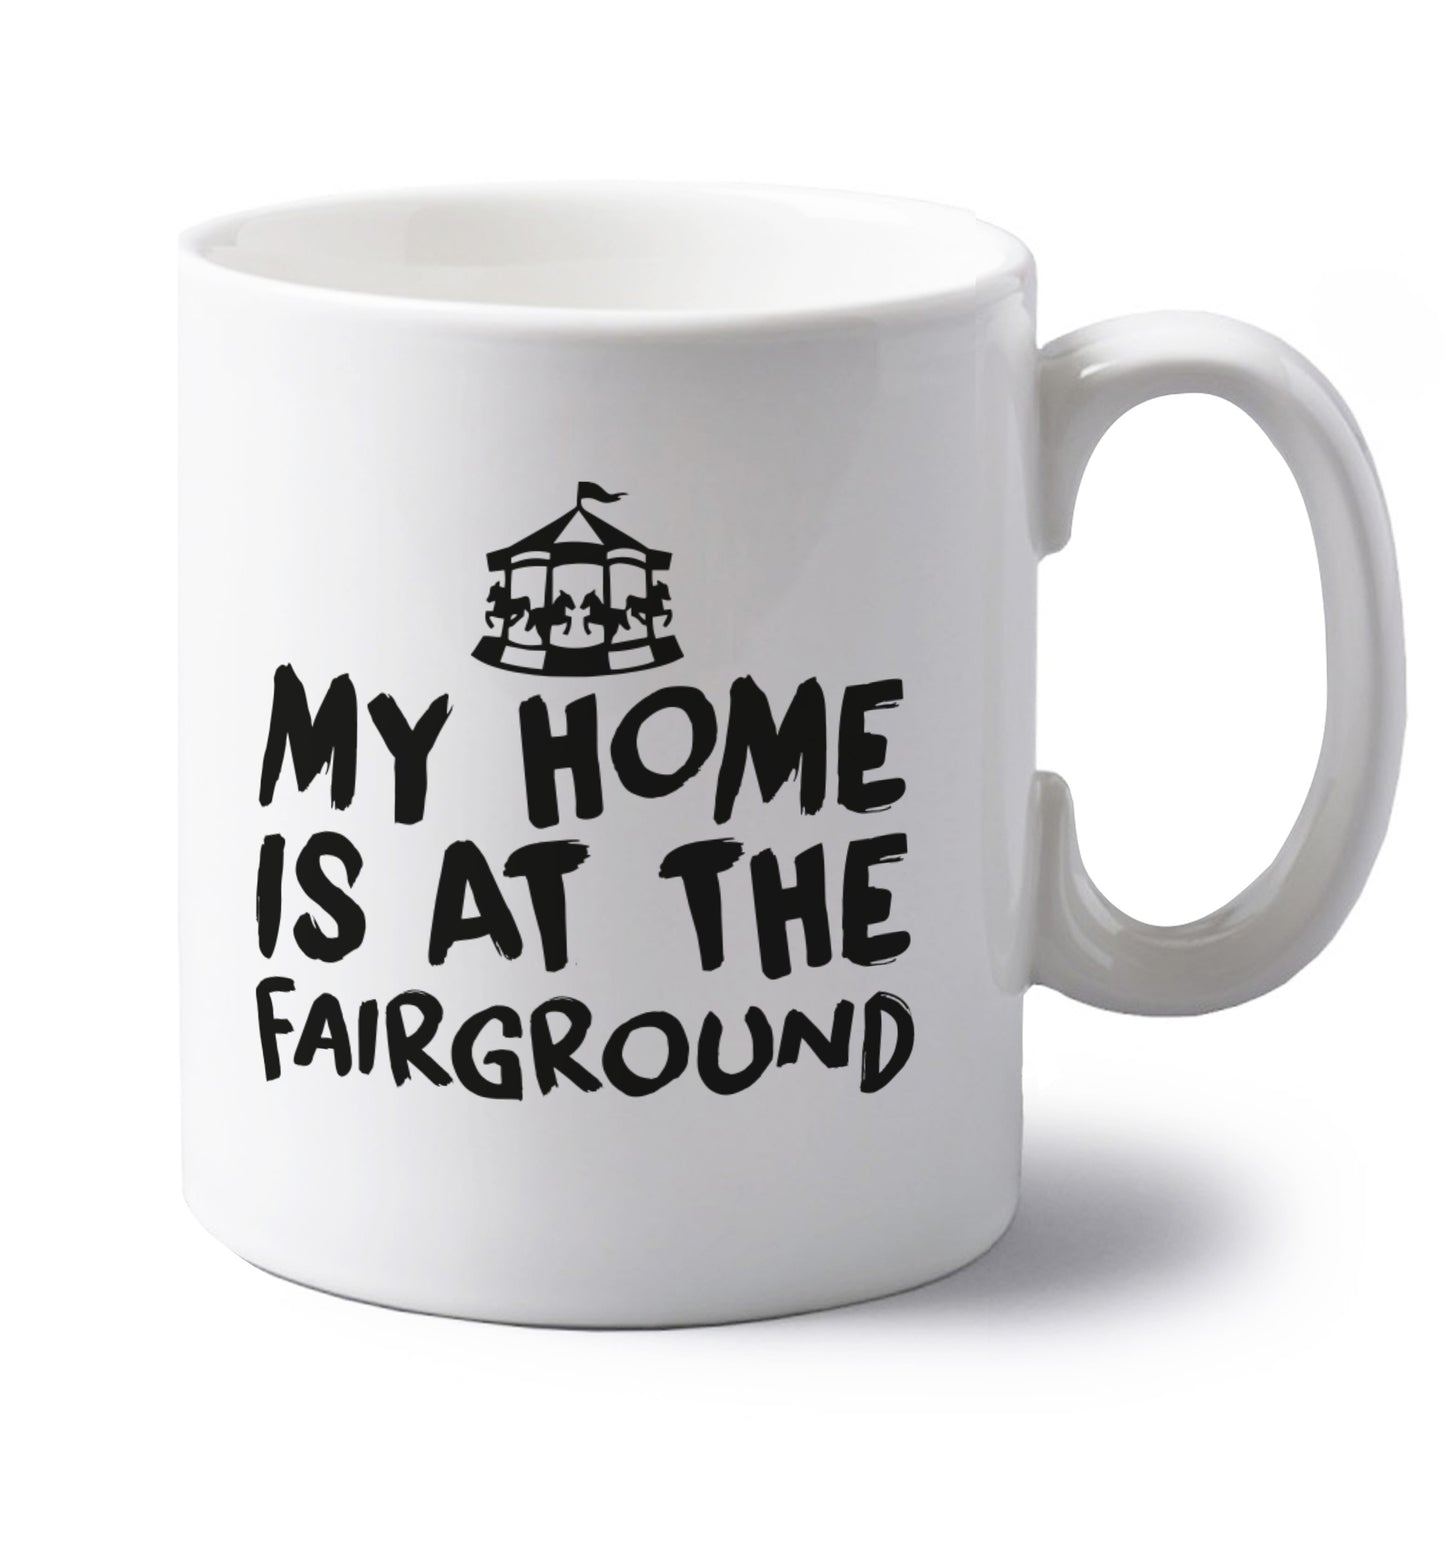 My home is at the fairground left handed white ceramic mug 